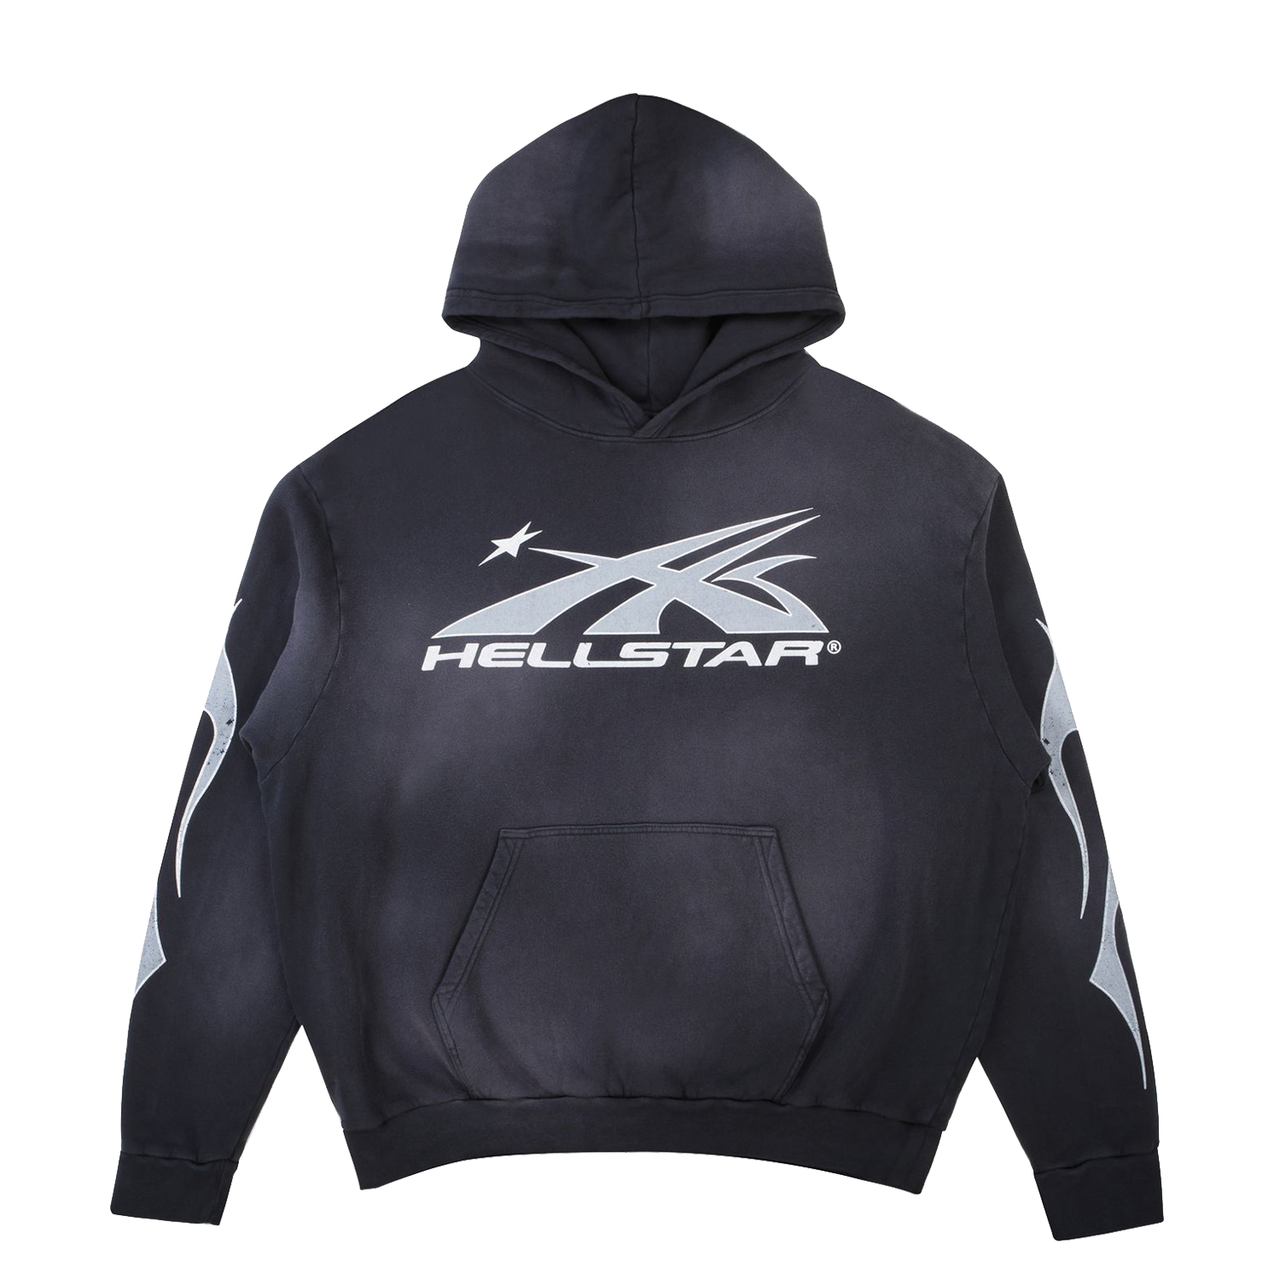 Hellstar Sport Sweatshirt Black